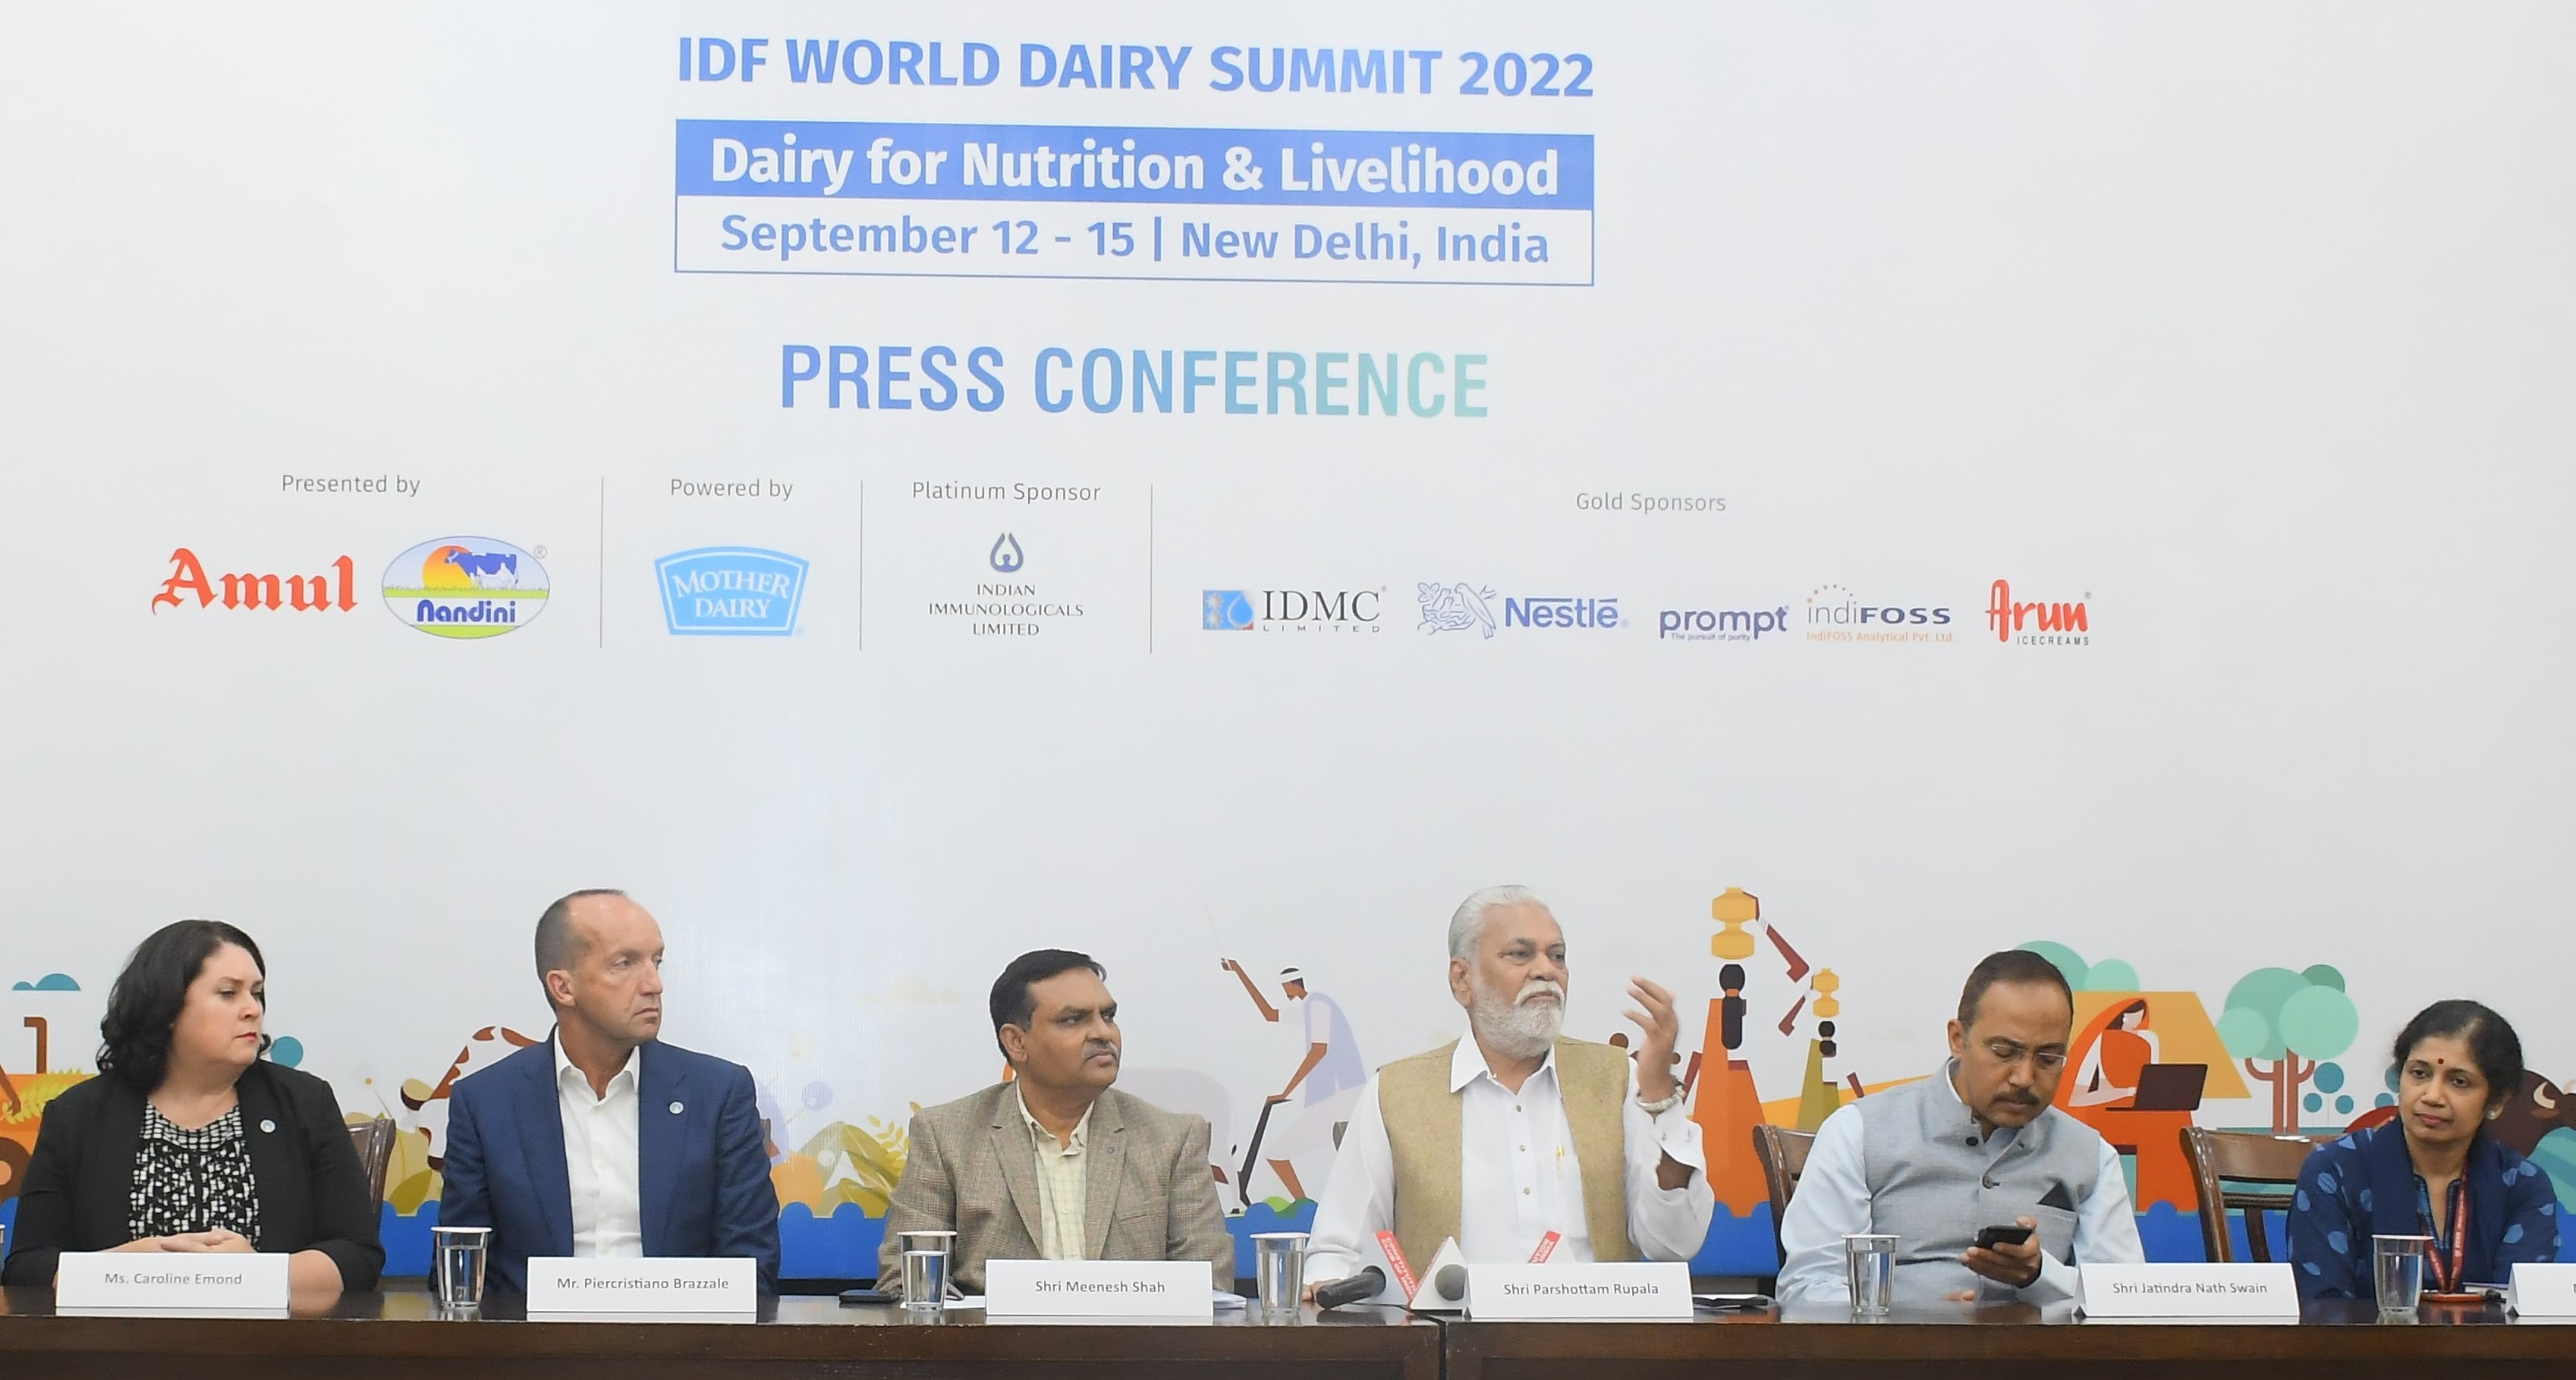 PM narendra modi will inaugurate IDF World Dairy Summit on 12 Sept